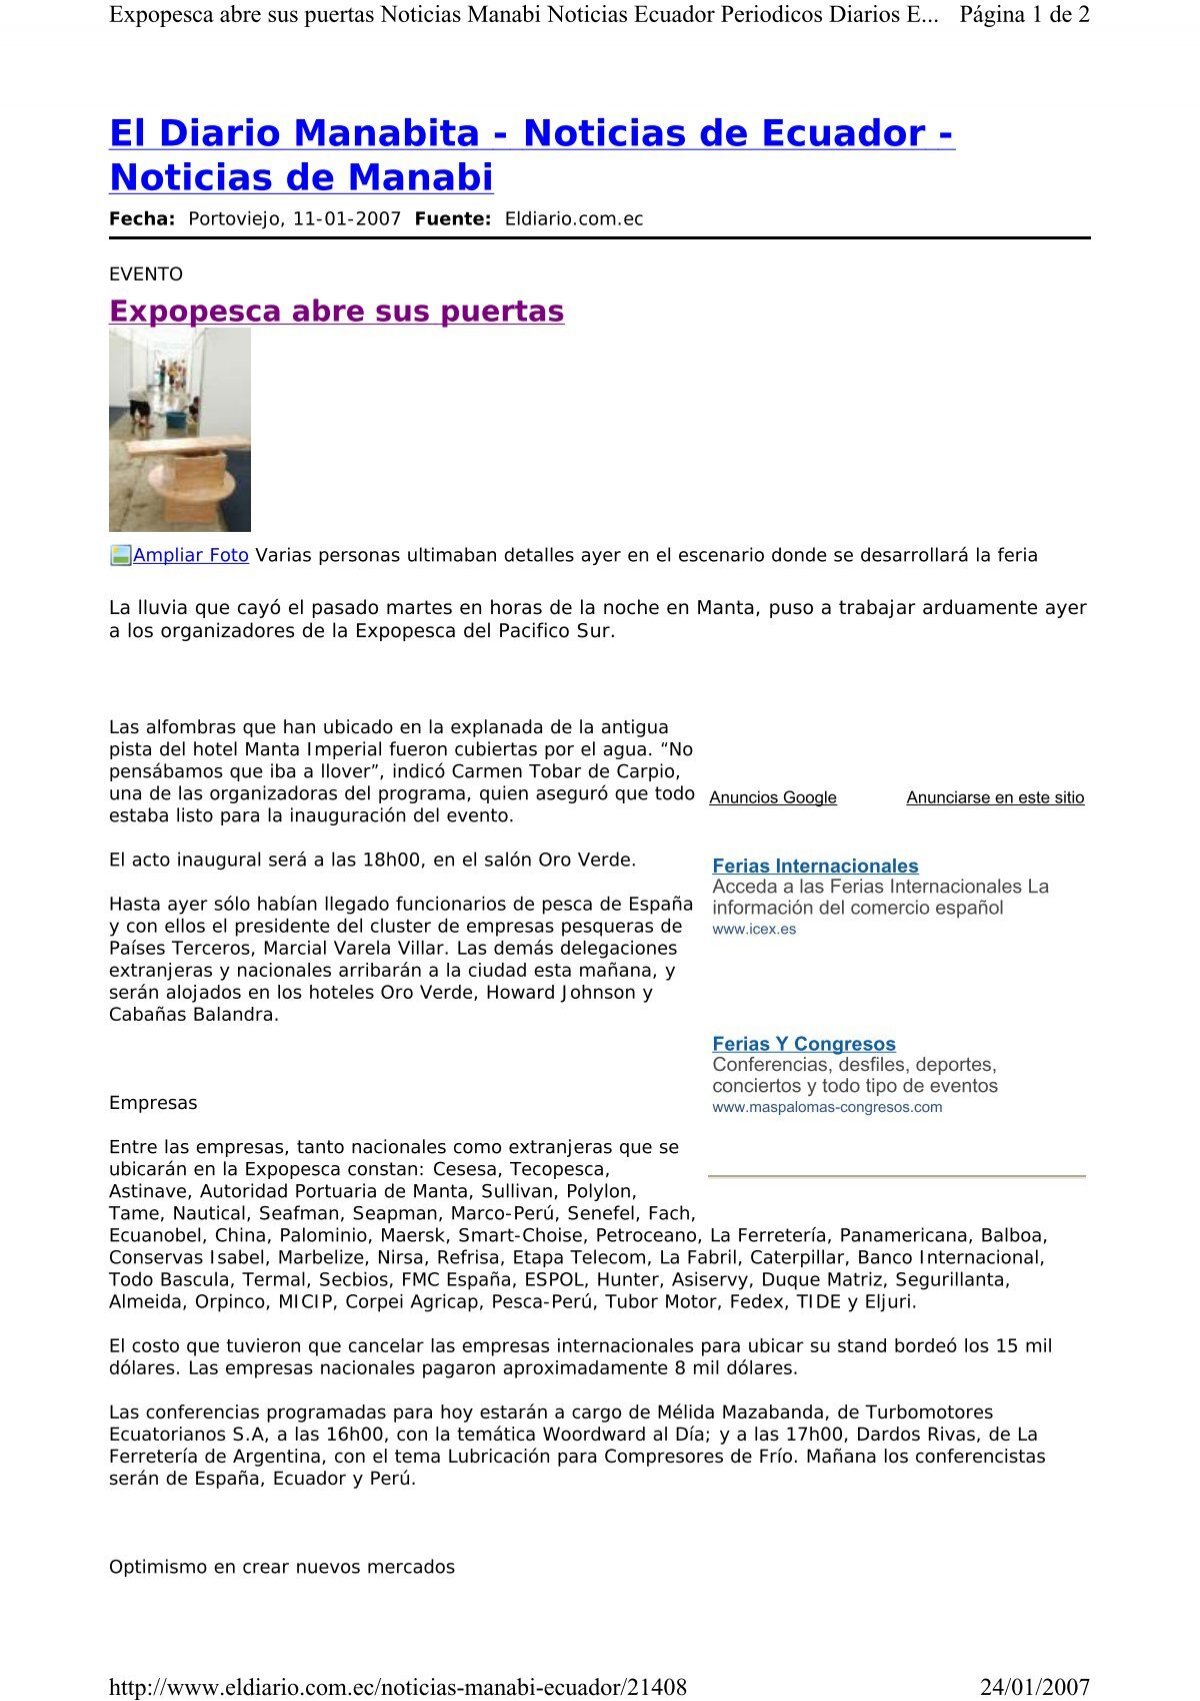 El Diario Manabita Cluster Empresas Pesqueras En Paises